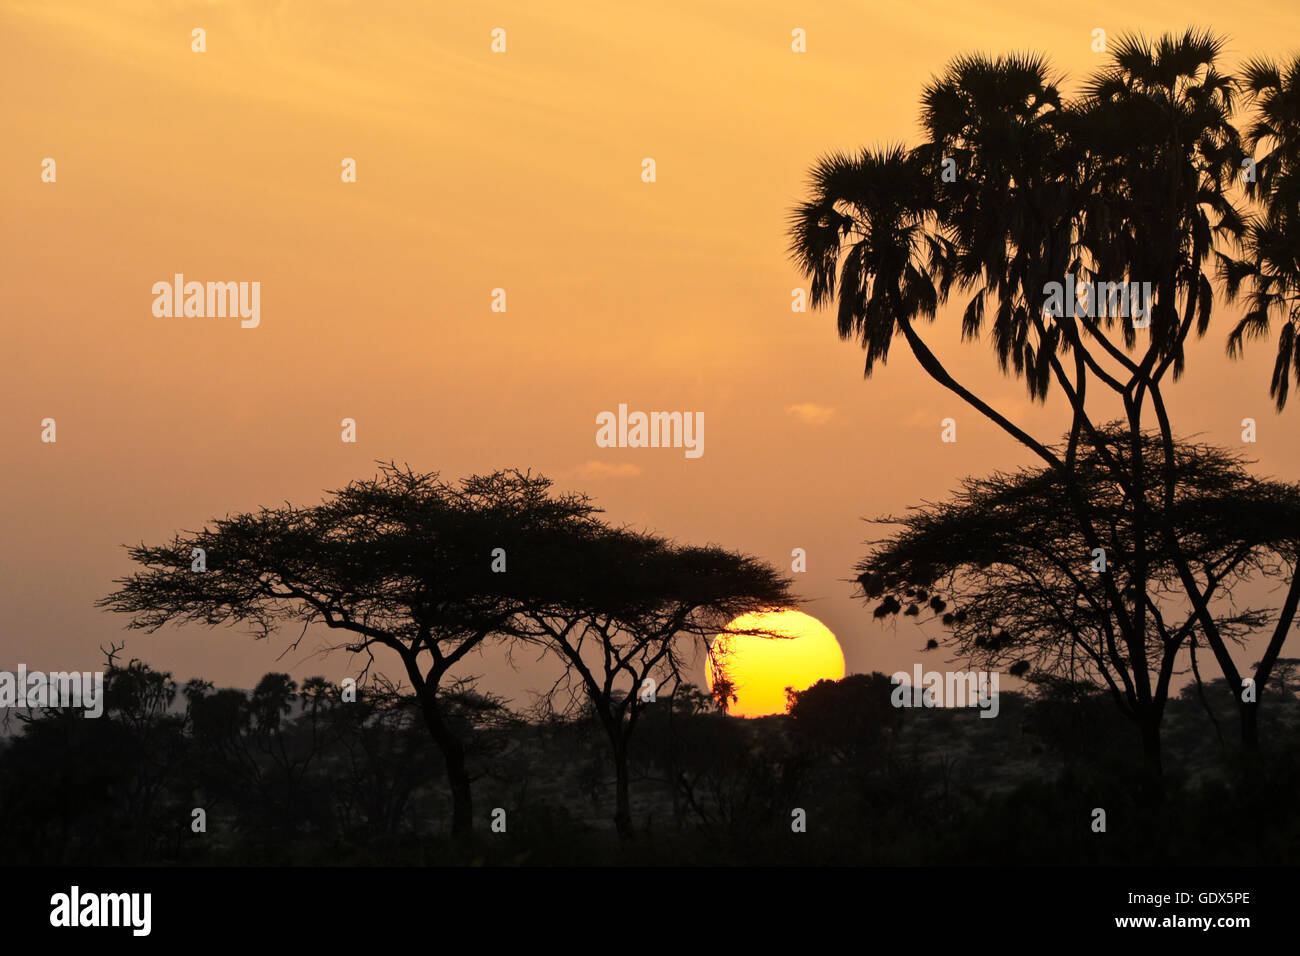 Sonnenaufgang hinter Akazien und Doum Palmen, Samburu Game Reserve, Kenia Stockfoto